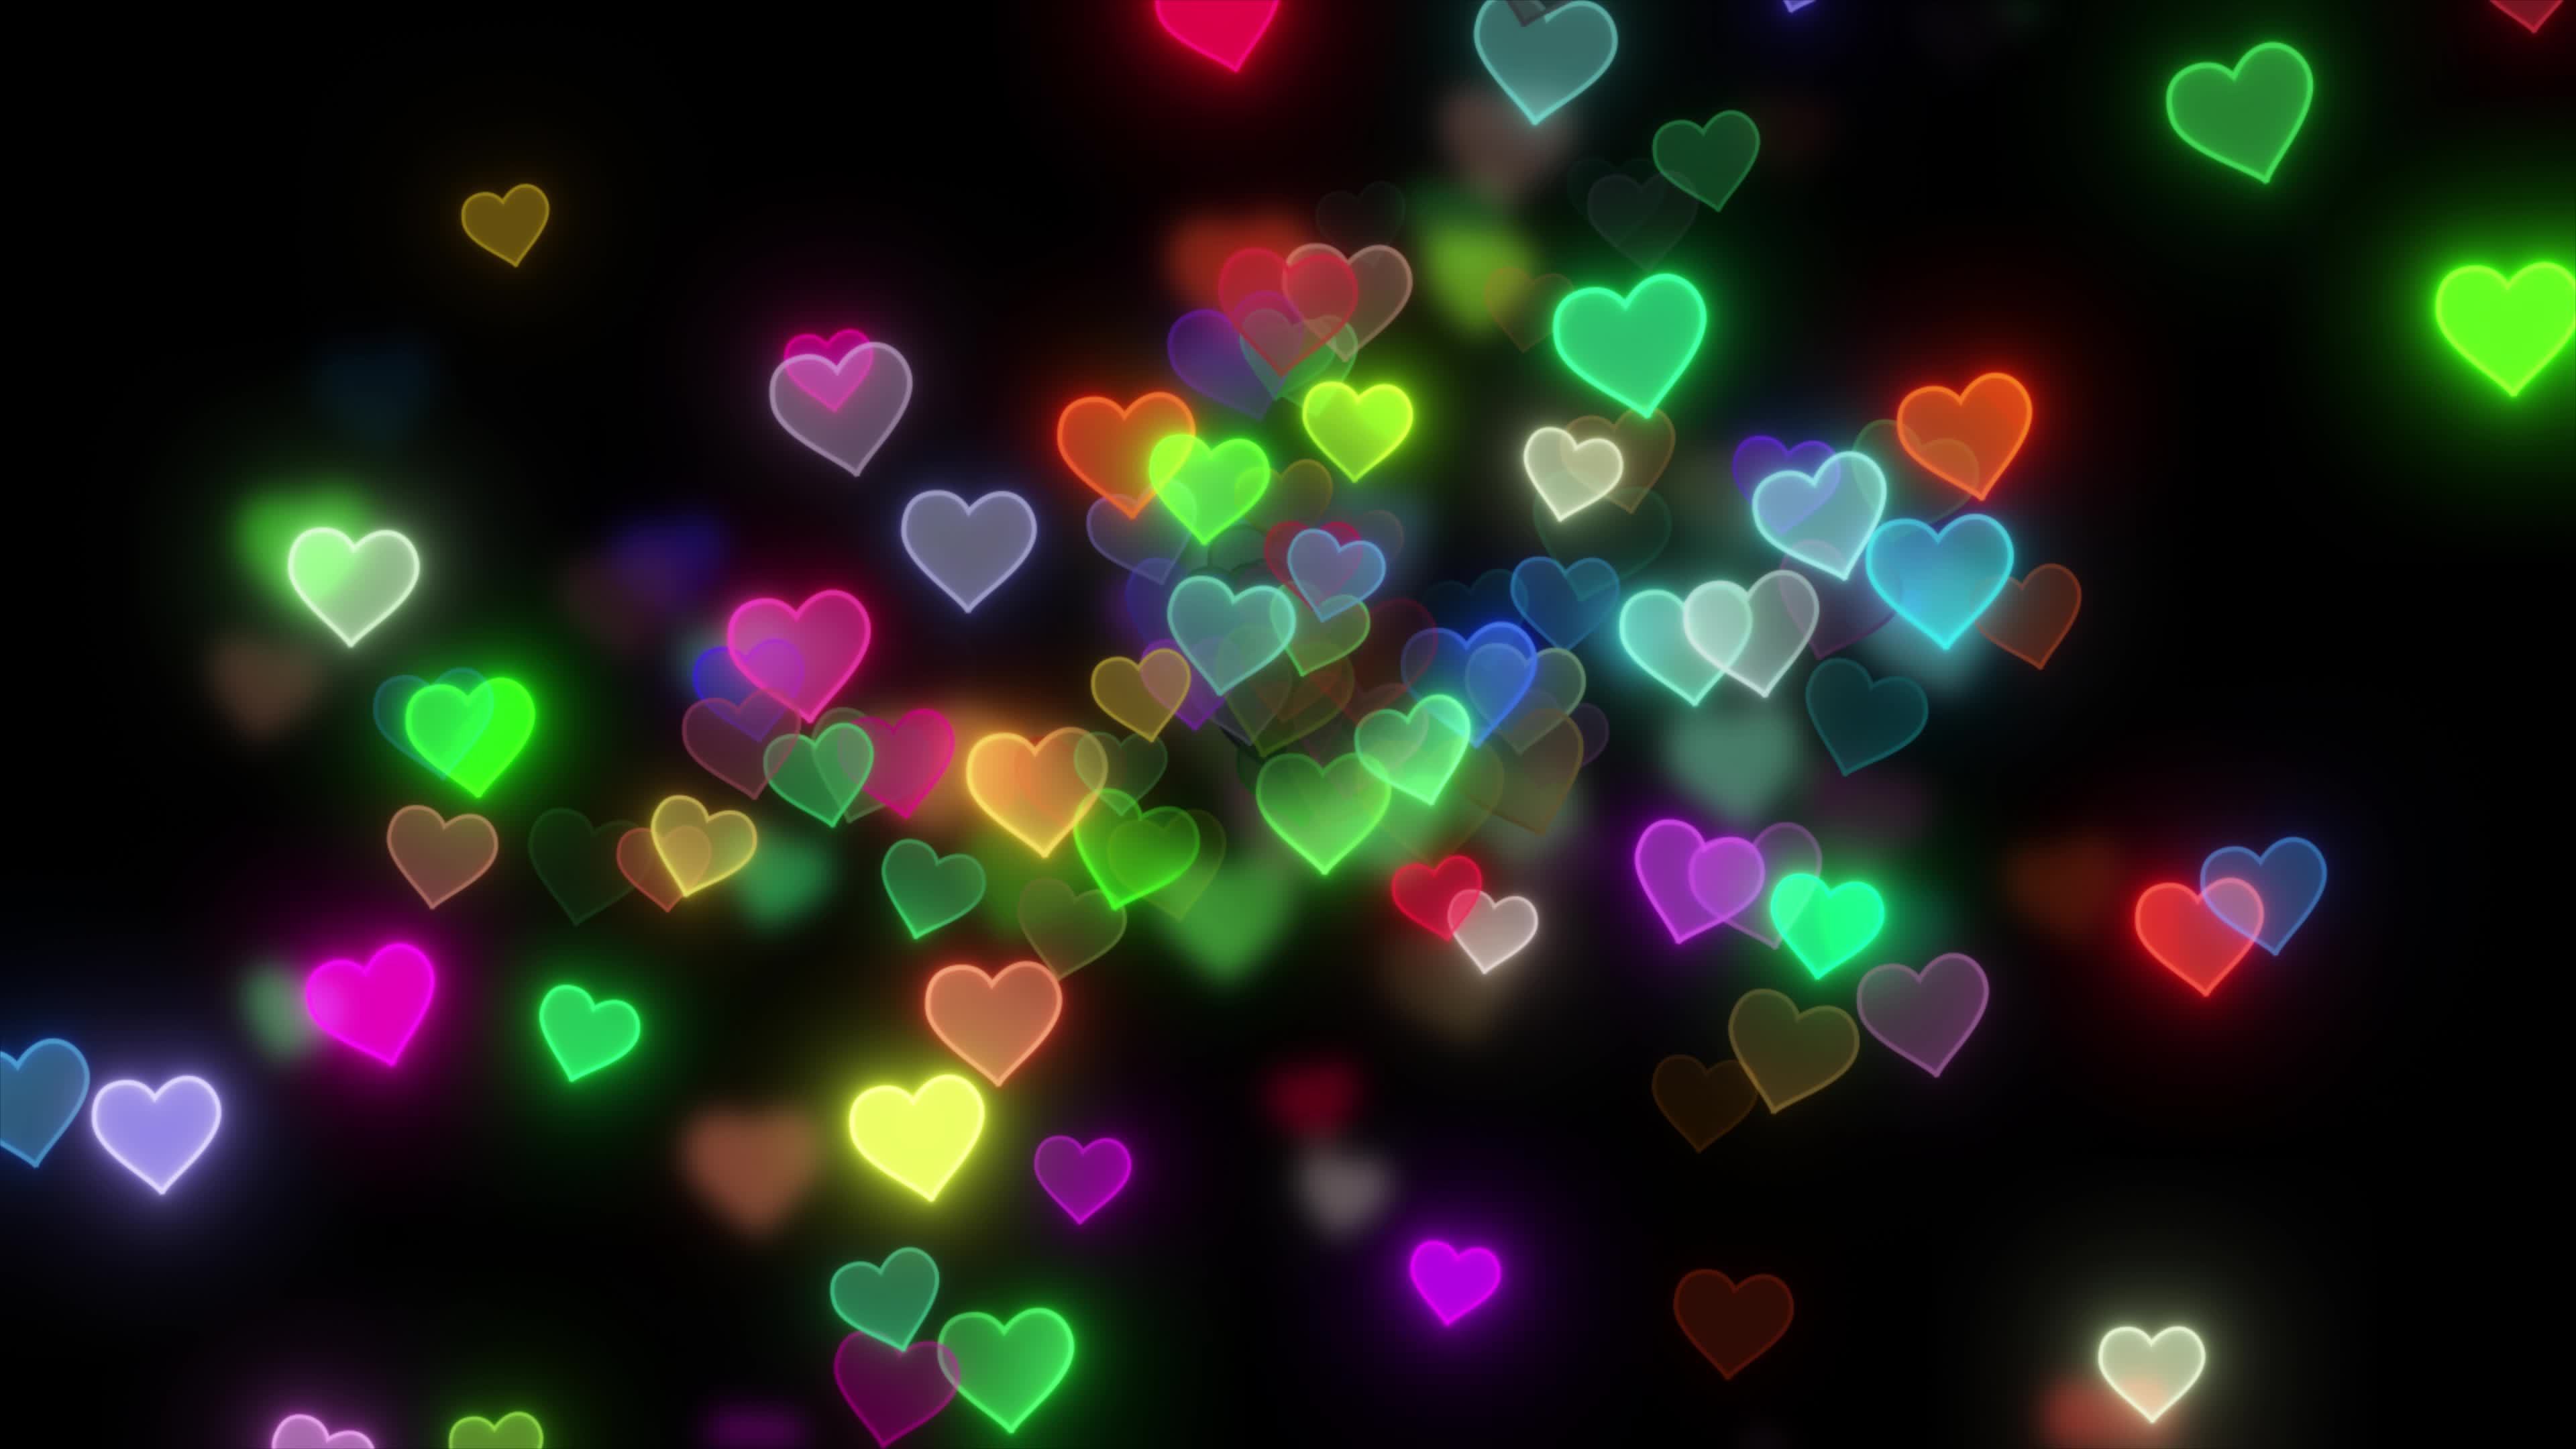 Glowing Heart Images  Free Download on Freepik